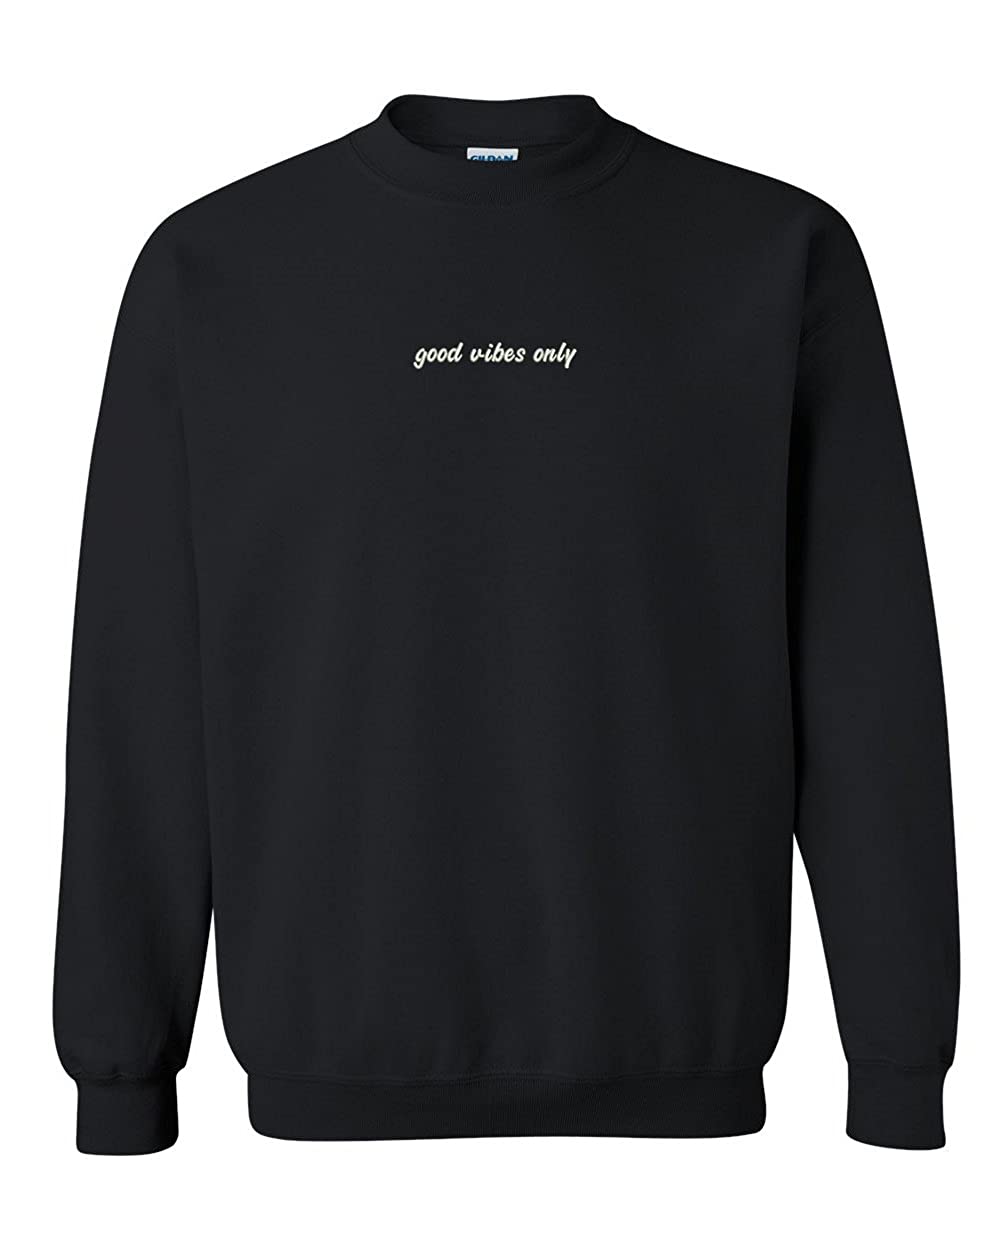 Trendy Apparel Shop Good Vibes Only Italic Embroidered Crewneck Sweatshirt